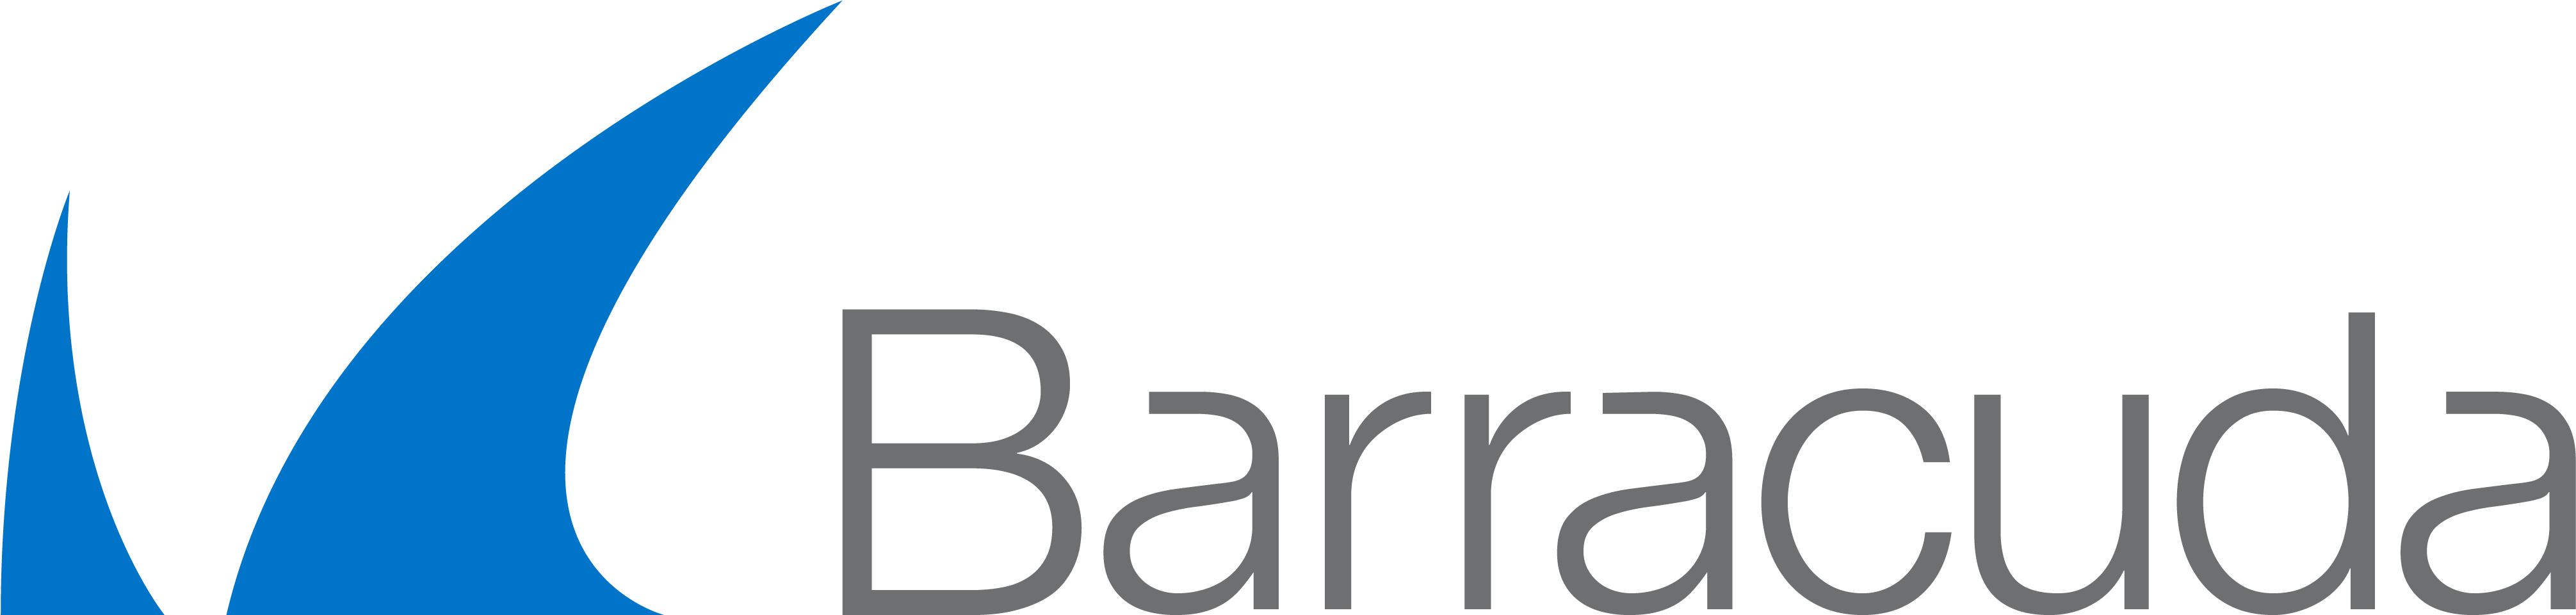 Barracuda Office 365 Migration - Barracuda Backup (4147x1101)